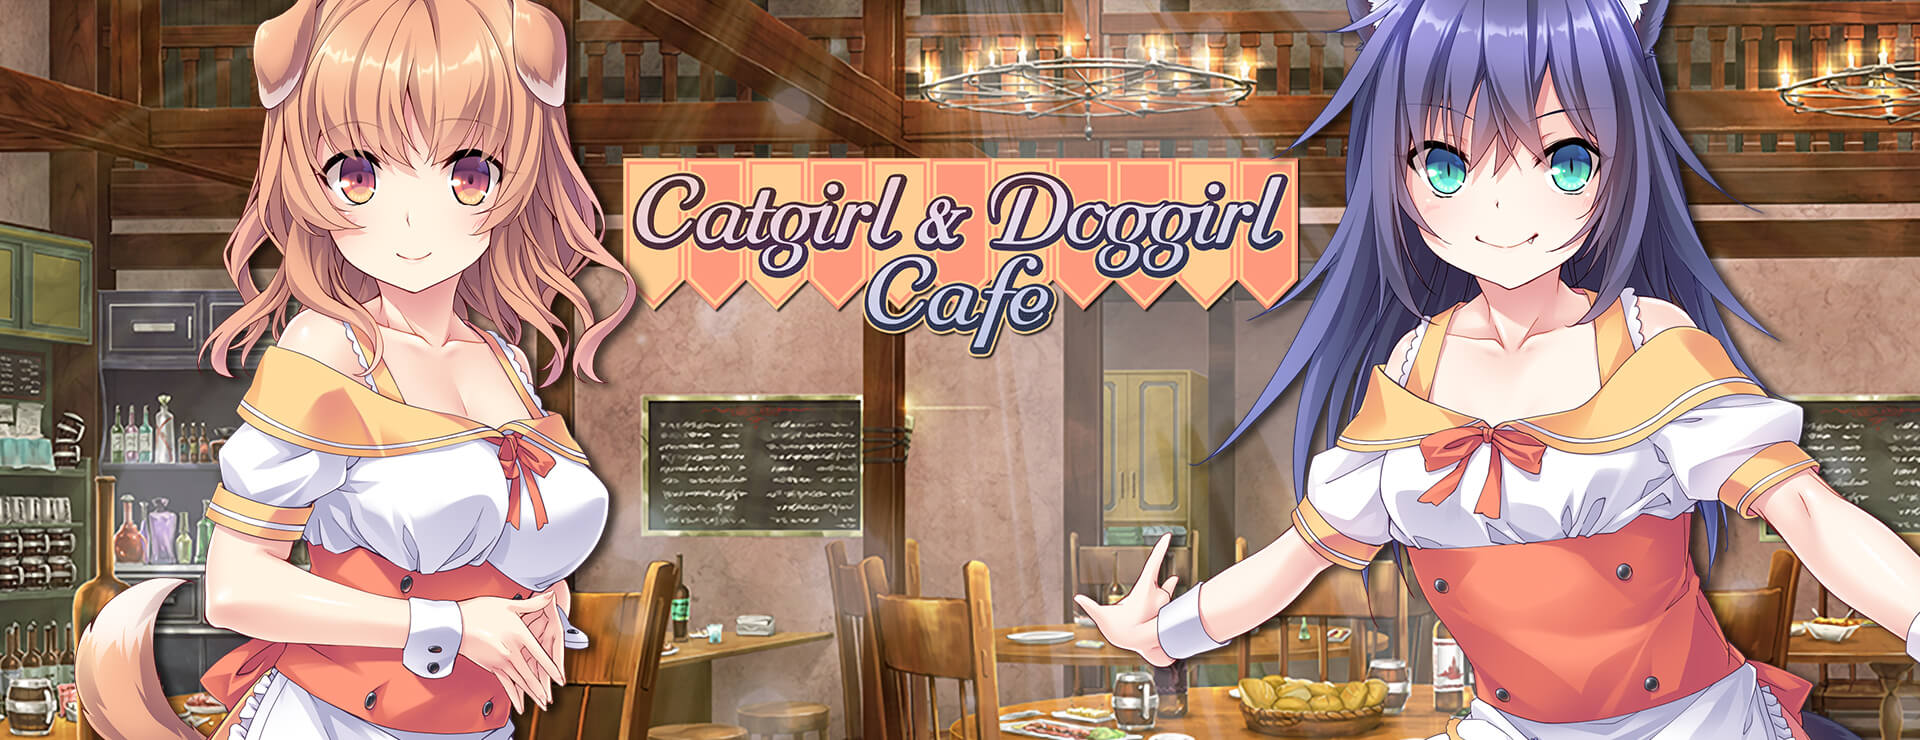 Catgirl and Doggirl Cafe - Novela Visual Juego